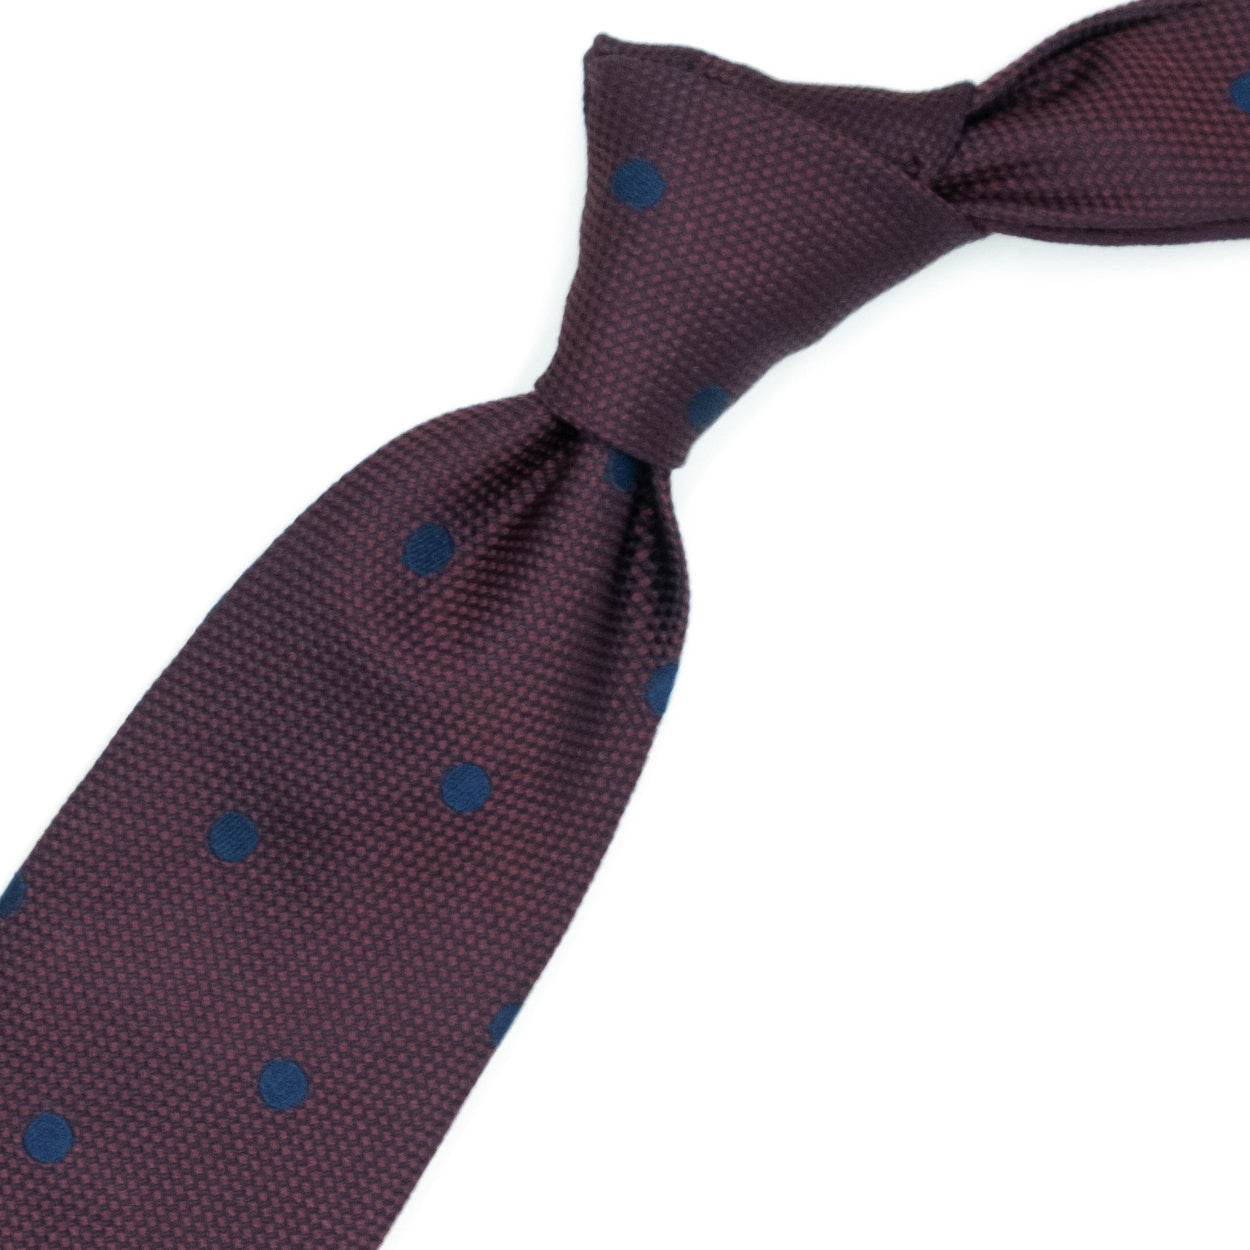 Cravatta bordeaux con pois blu